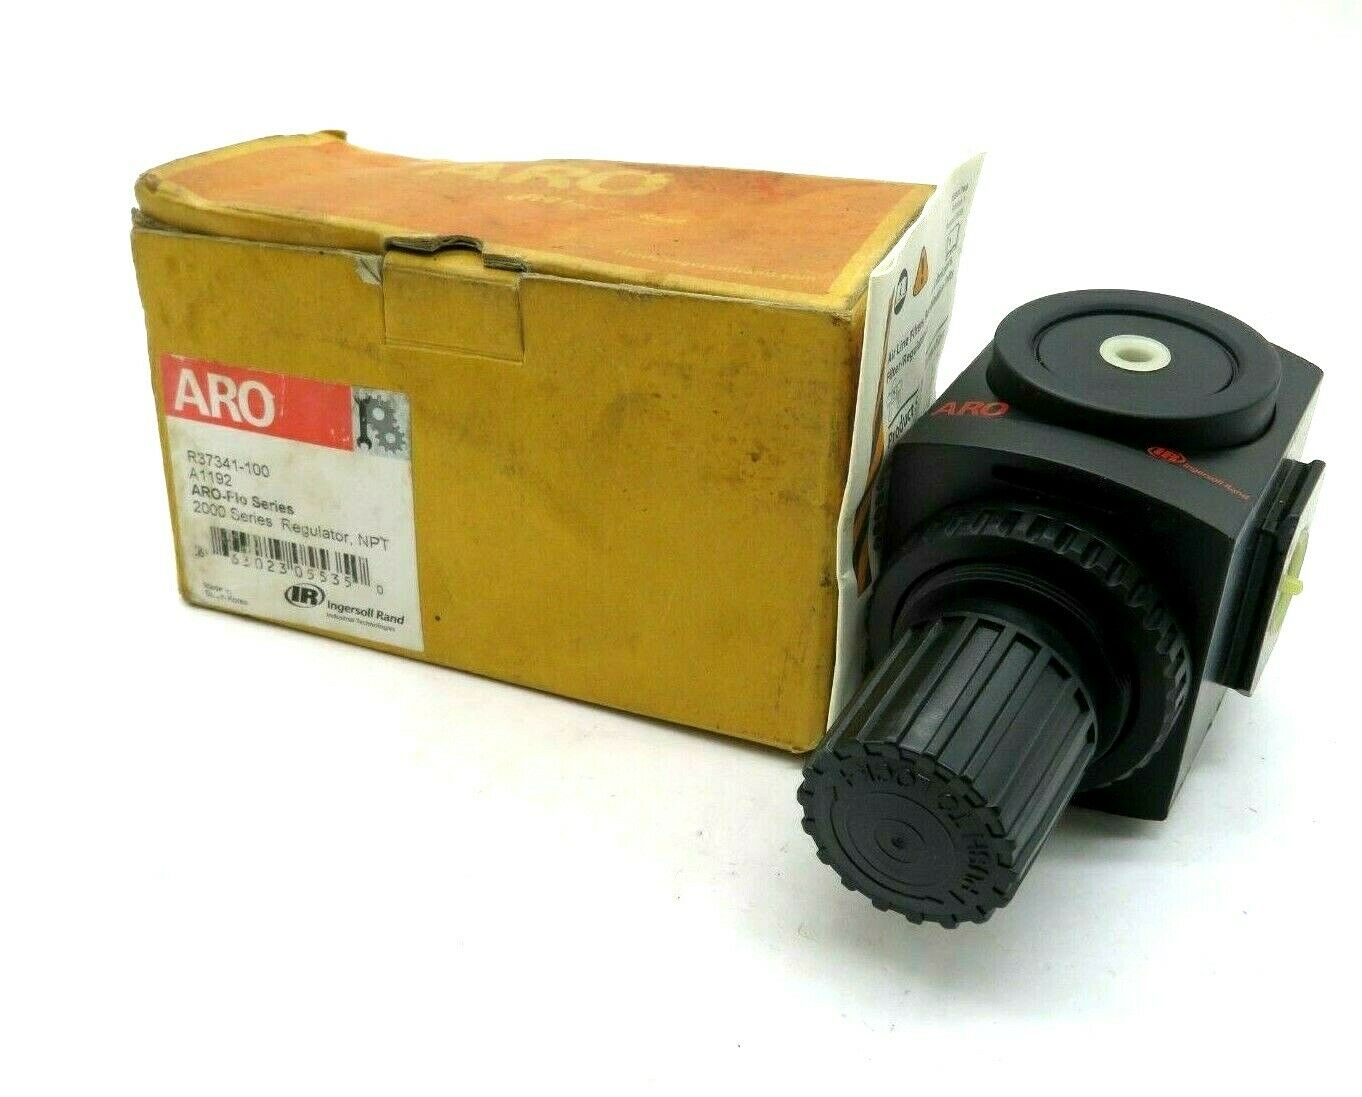 New Aro Ingersoll Rand R37341-100 2000 Series Regulator R37341100